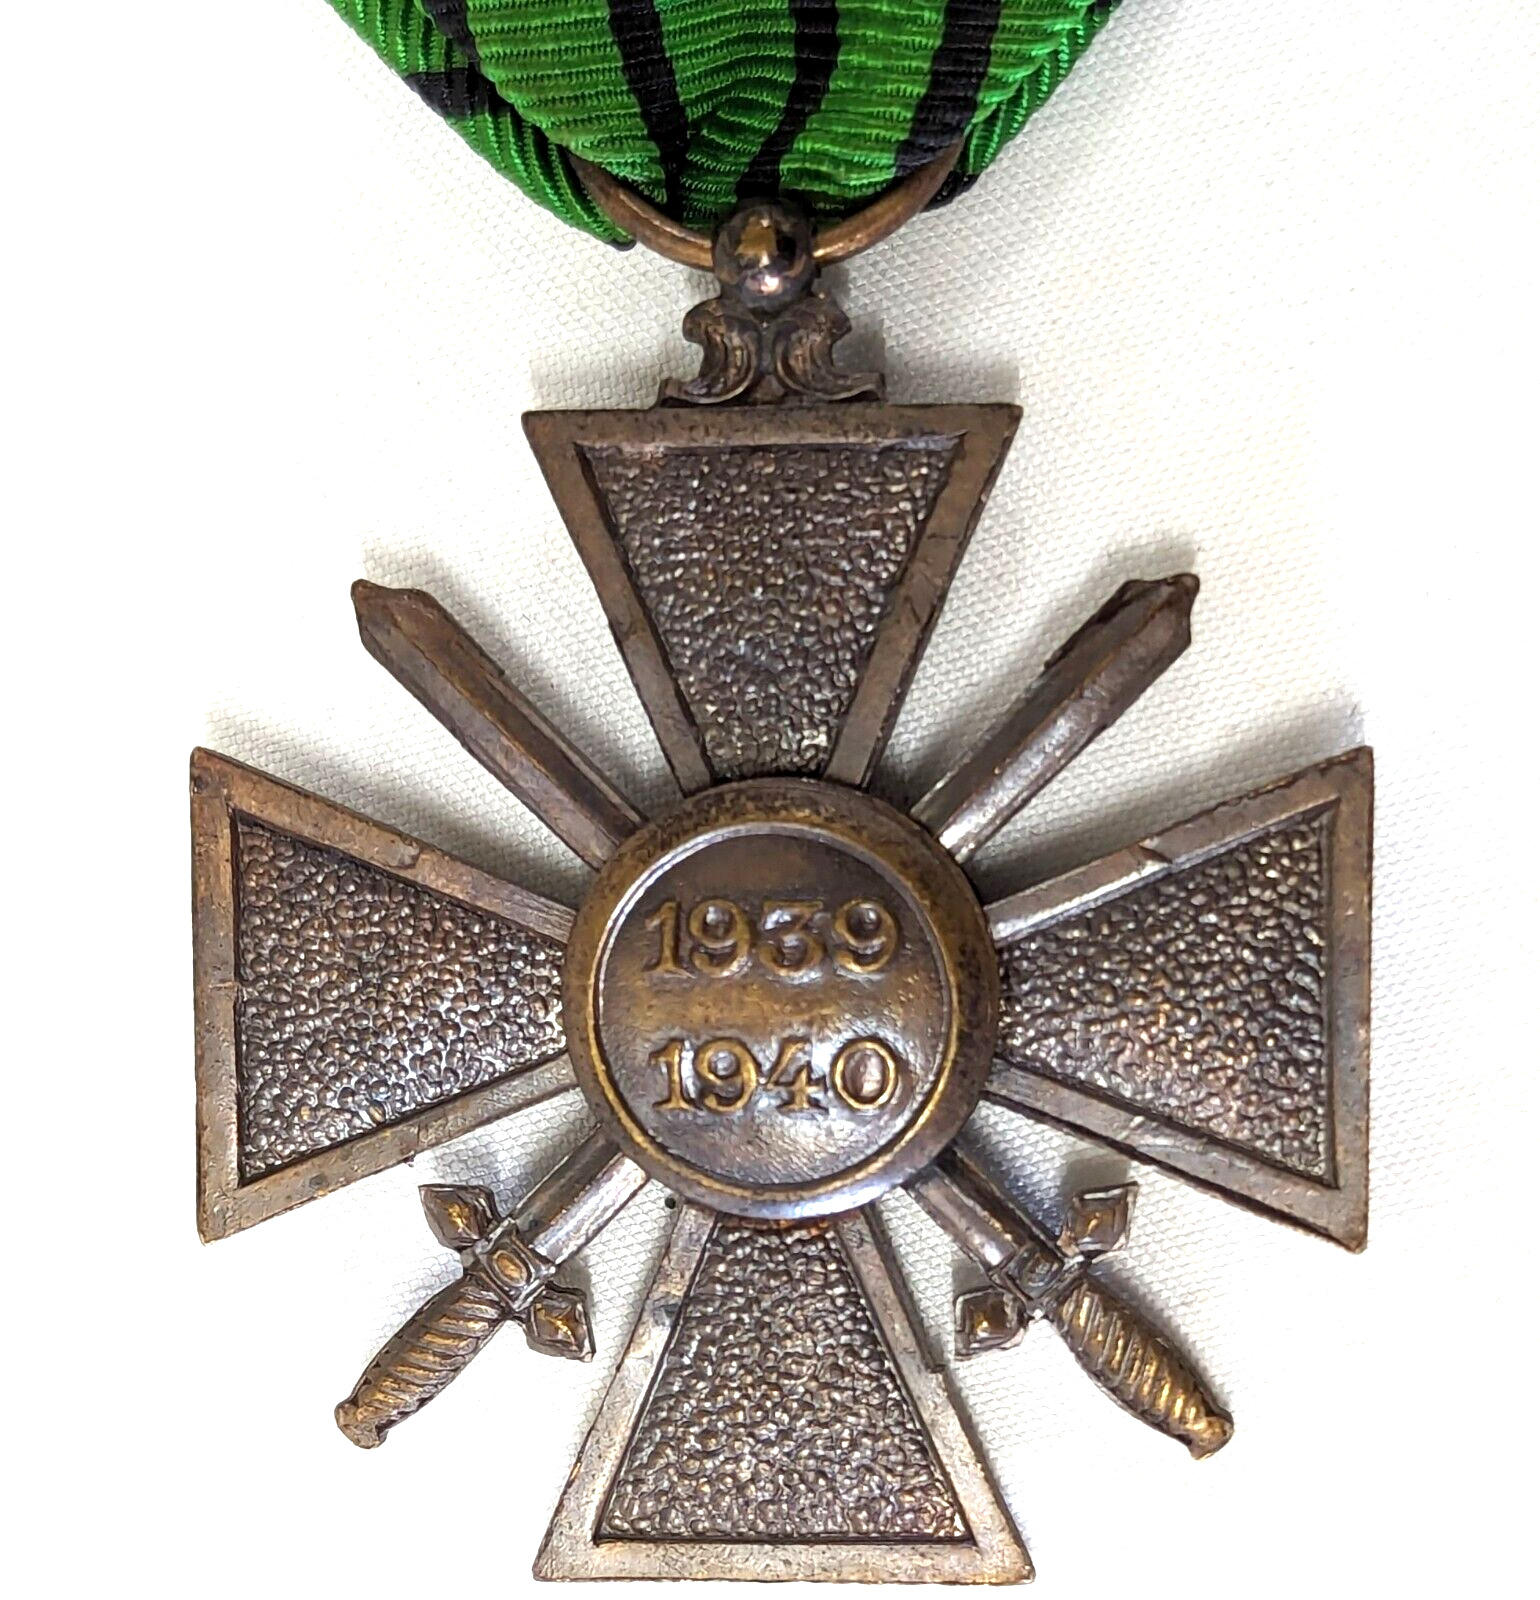 Rare WW2 Vichy France Croix De Guerre medal - combat gallantry cross